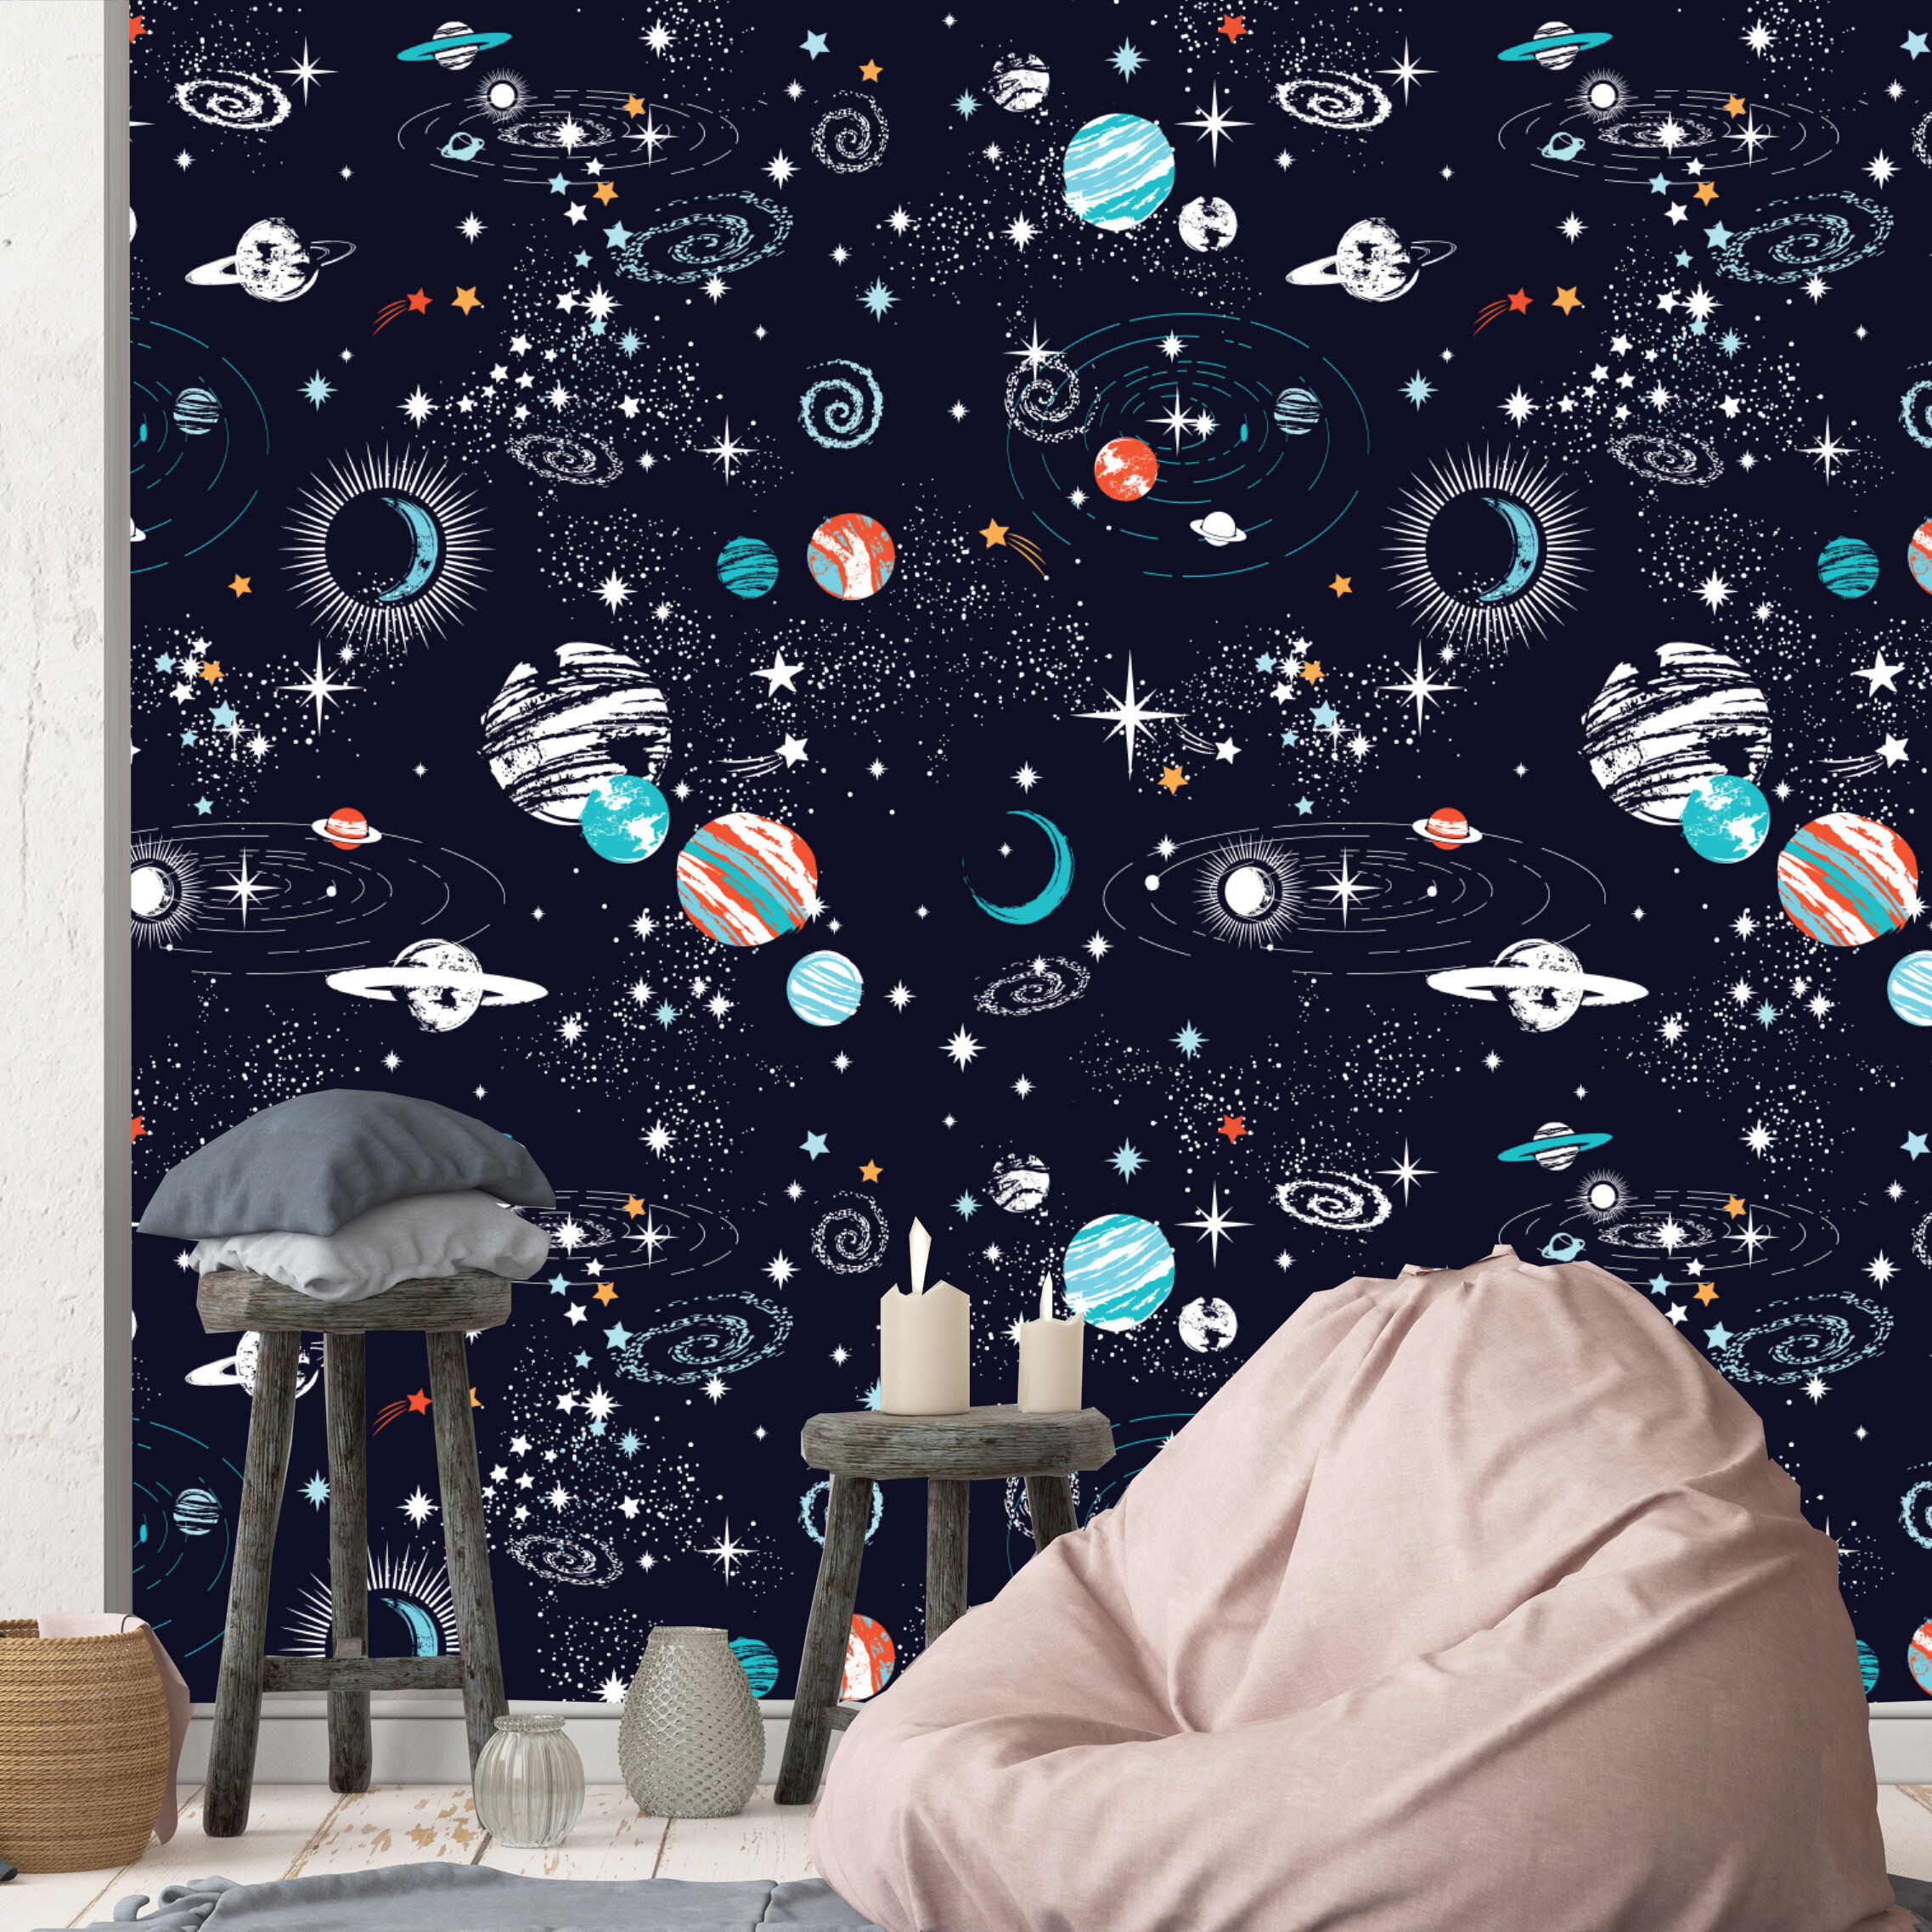 Constellation Wallpaper You Ll Love In 2021 Wayfair